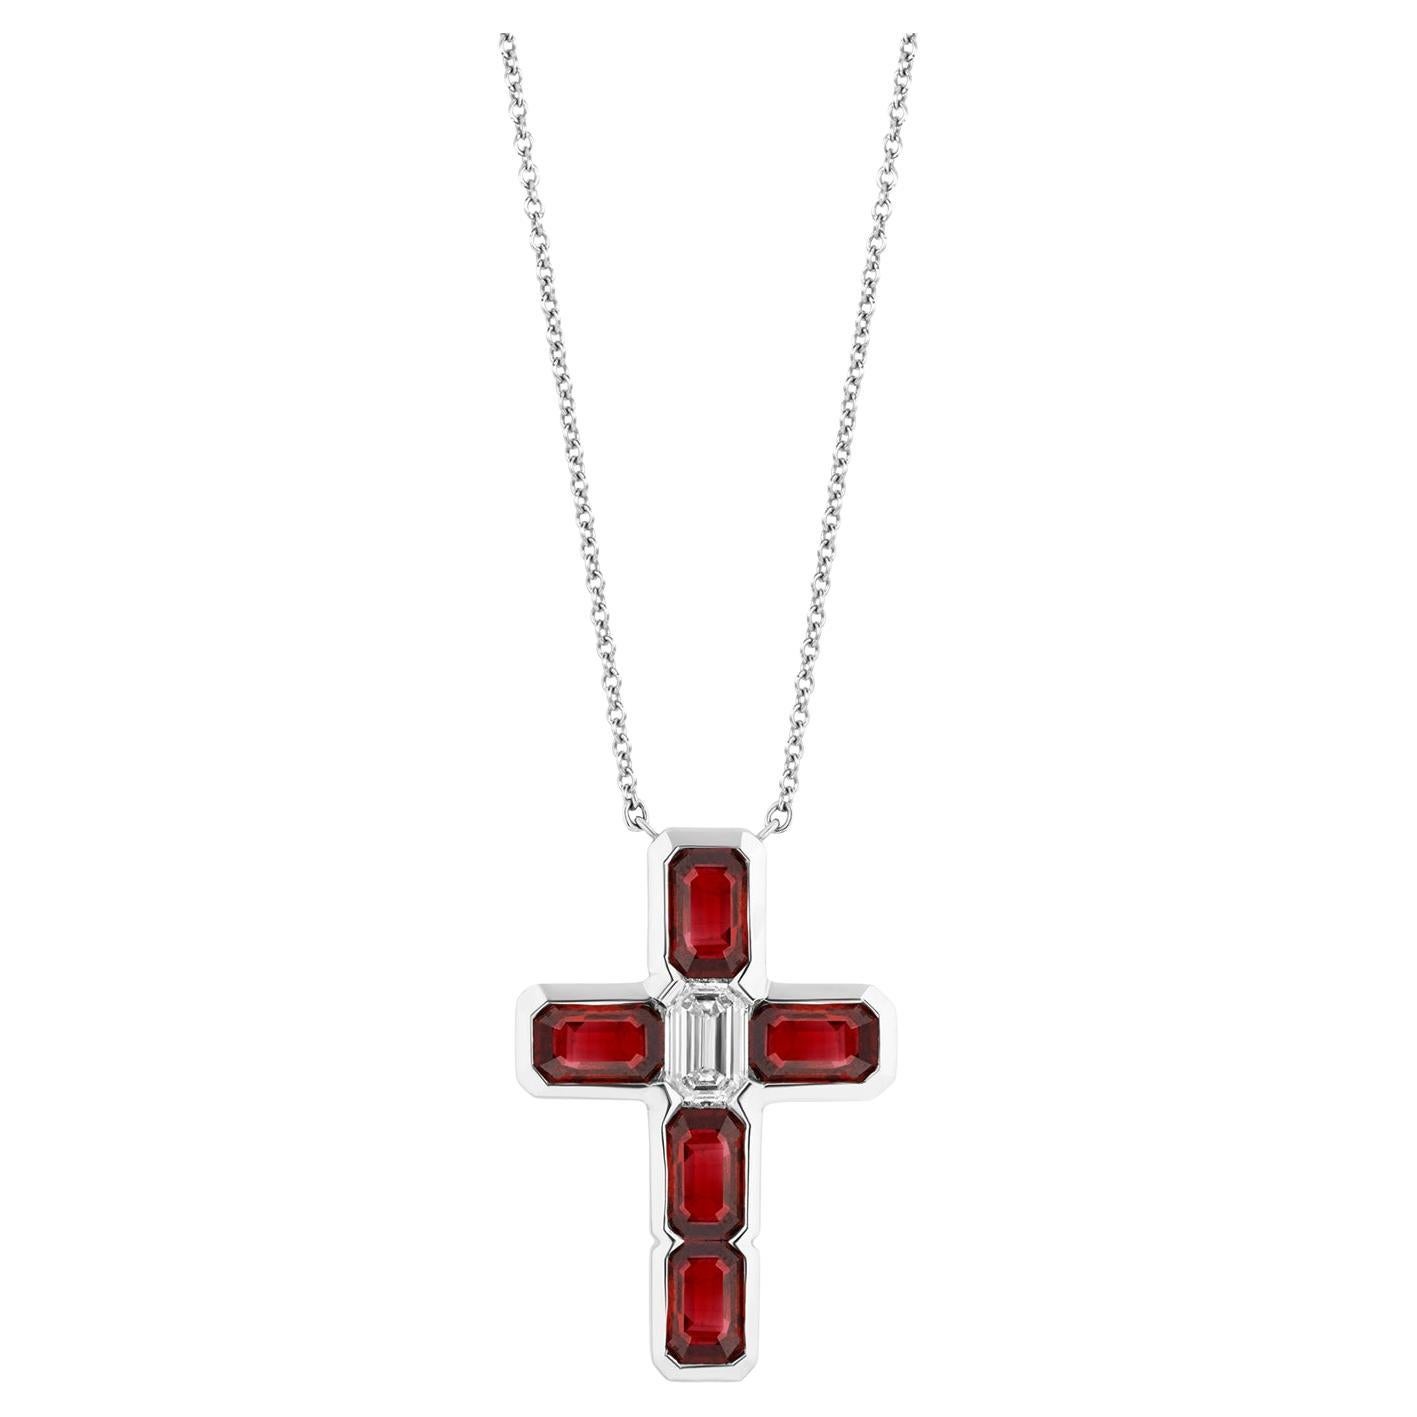 3.68 Carat Emerald Cut Ruby and Diamond Cross For Sale